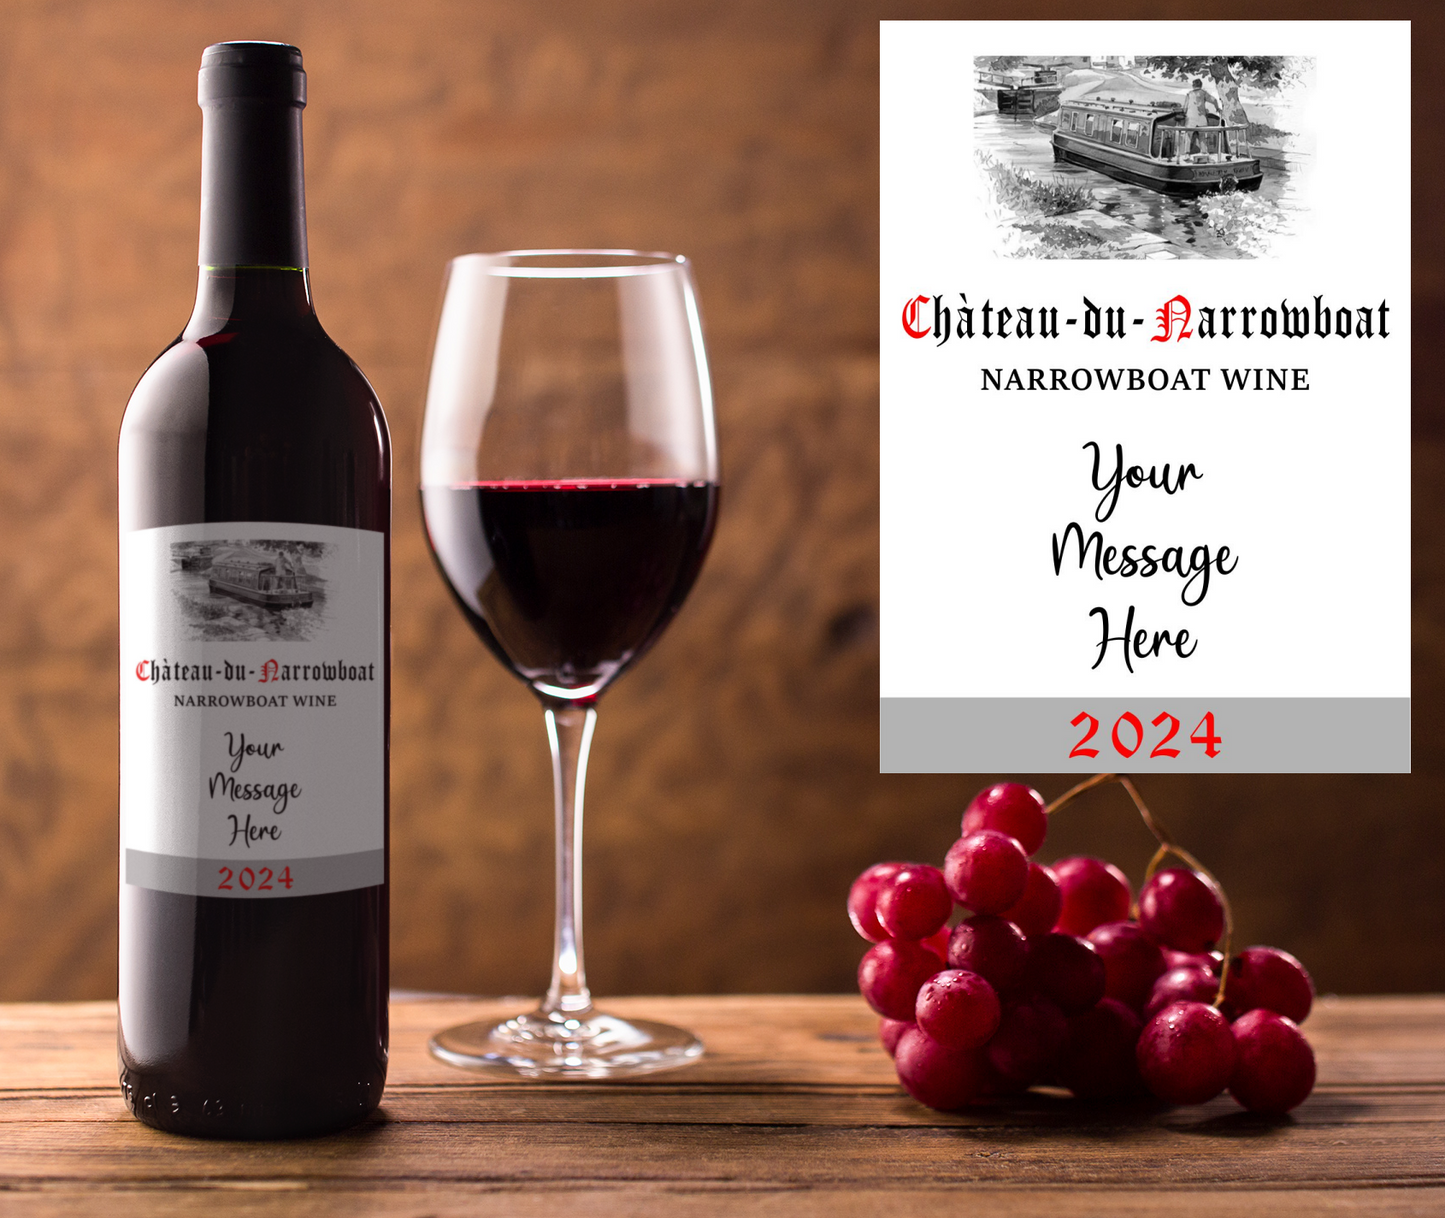 Narrowboat Wine Bottle Label x2 - Chateau du Narrowboat - Personalise Year & Message - To fit Most Alcohol Bottles Custom Gift